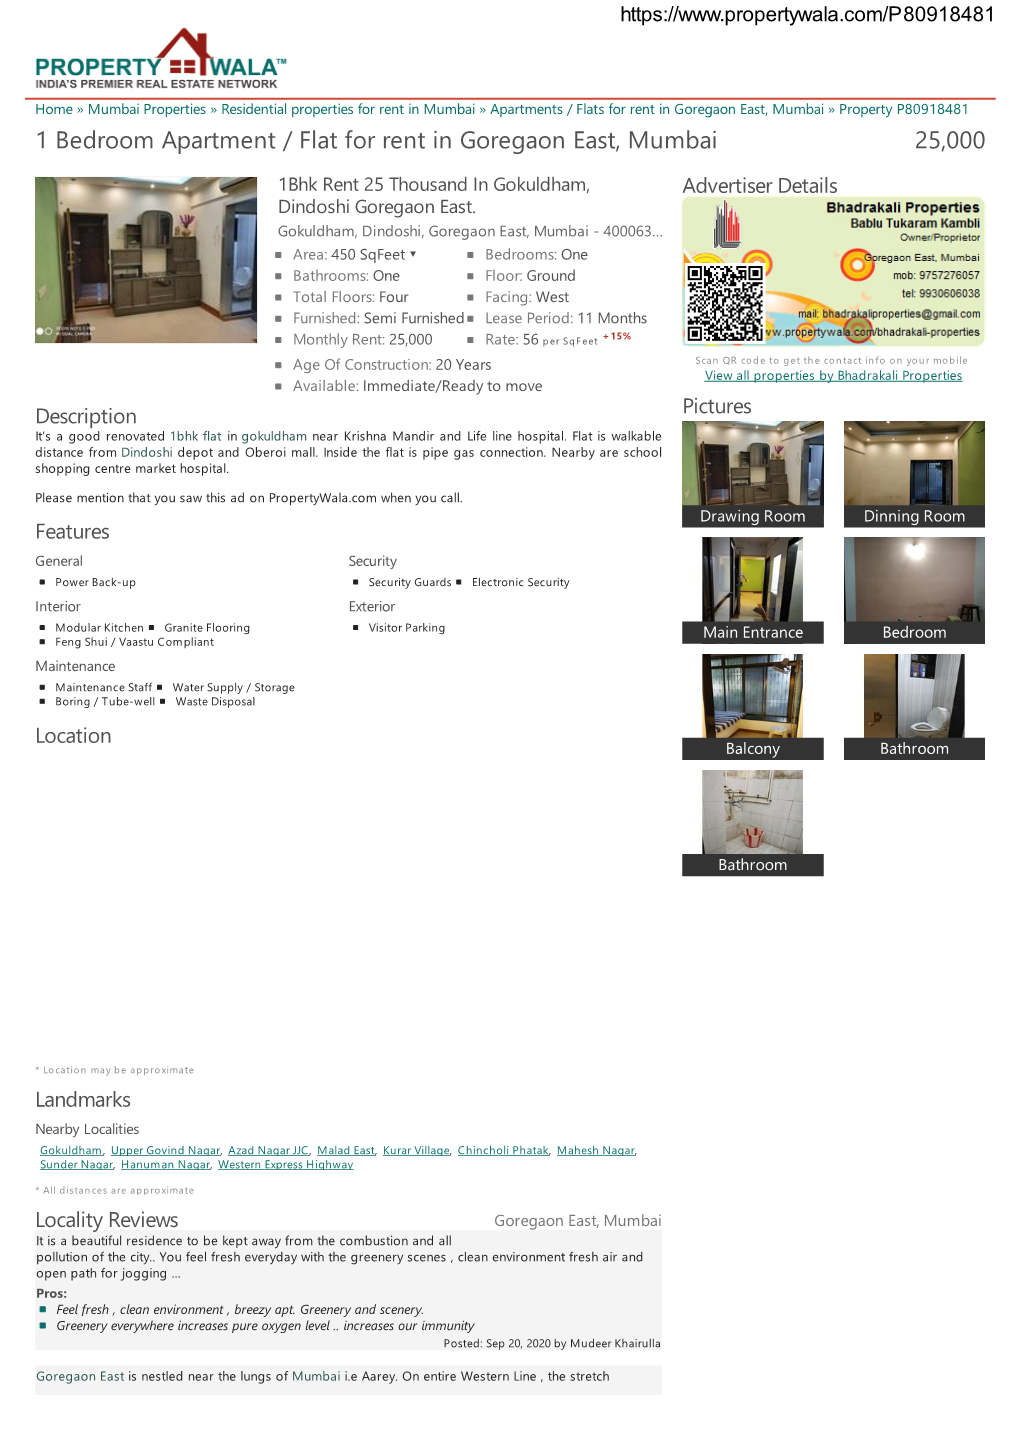 1 Bedroom Apartment / Flat for Rent in Goregaon East, Mumbai 25,000 1Bhk Rent 25 Thousand in Gokuldham, Advertiser Details Dindoshi Goregaon East